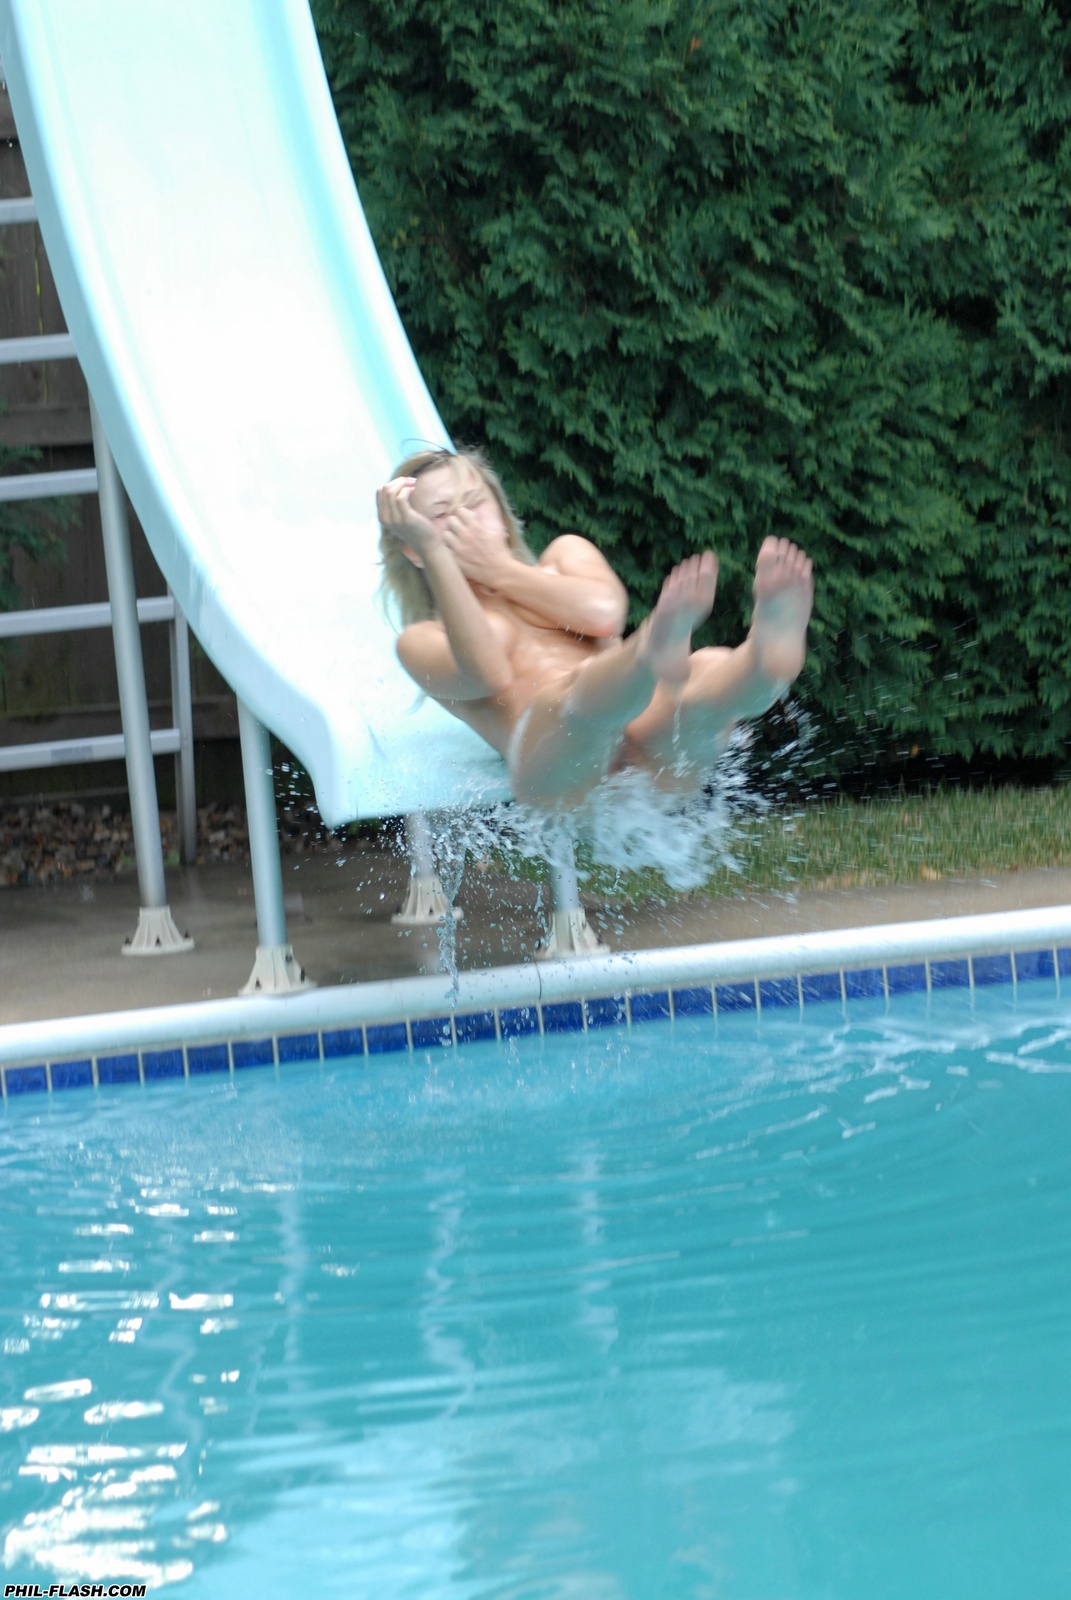 https://redbust.com/stuff/kasia-in-the-swimming-pool-vol-2/teen-kasia-pool-slide-wet-young-girl-tits-phil-flash-27.jpg